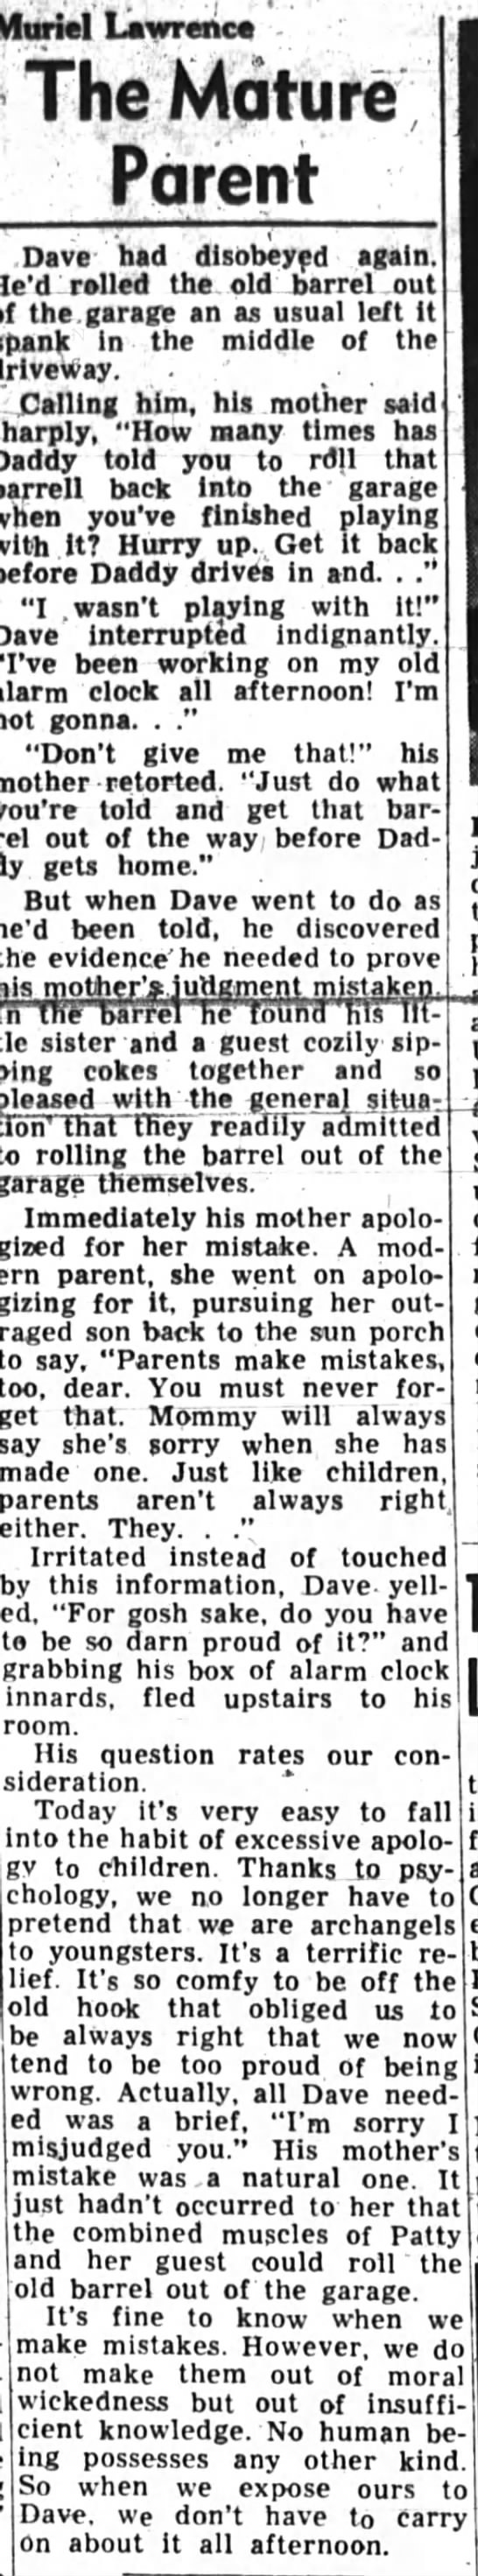 Poughkeepsie Journal 9 Oct 1959 - 